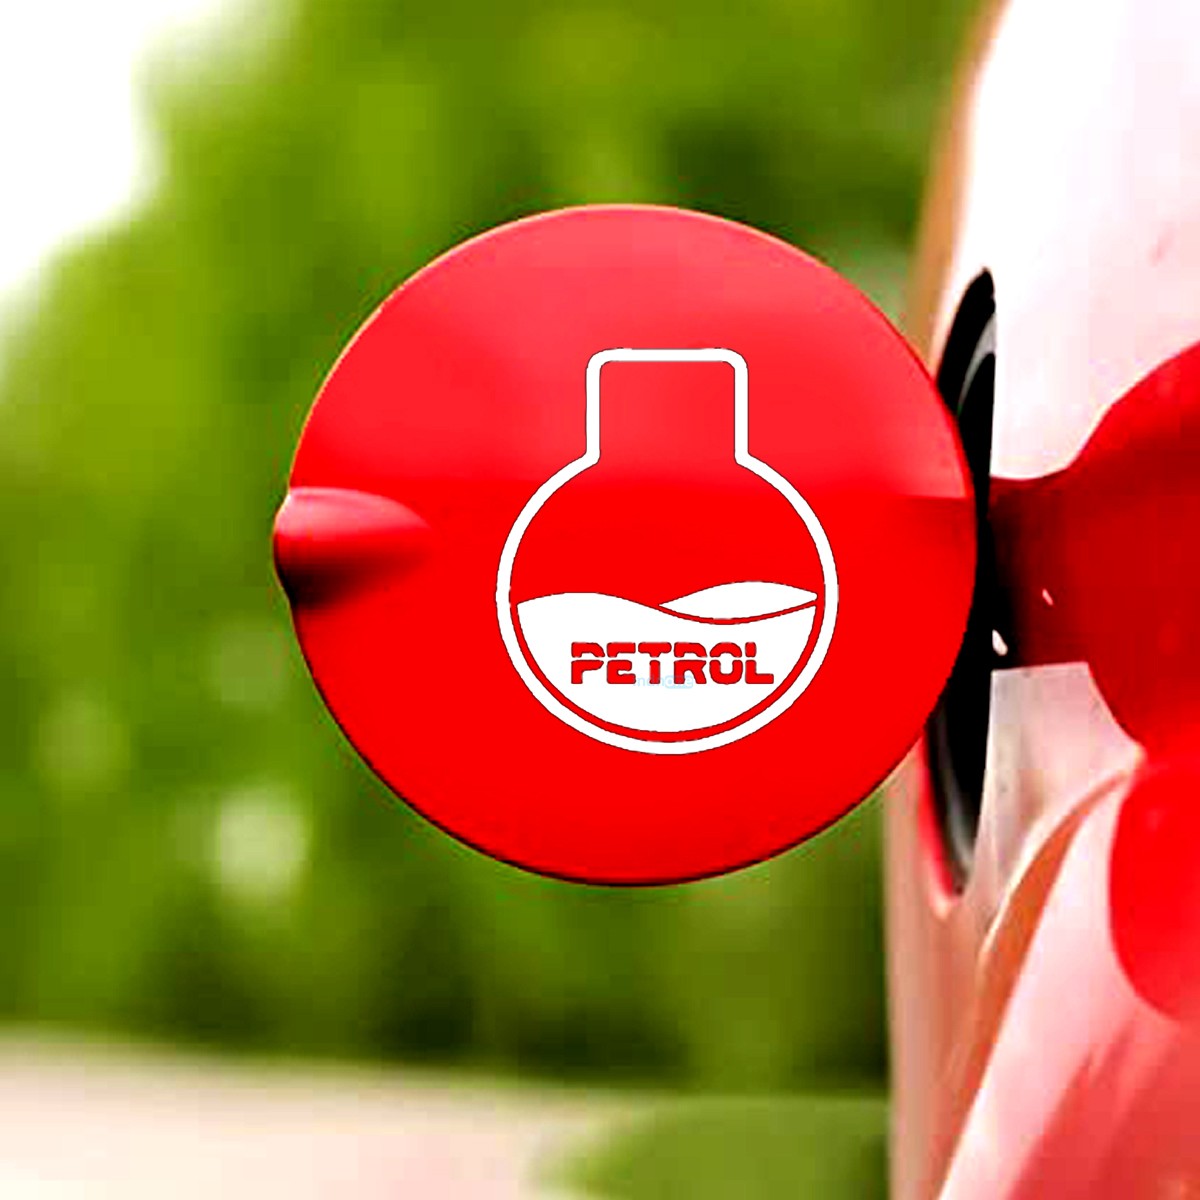 indnone® Test Tube Petrol Logo Sticker for Car. Car Sticker Stylish Fuel Lid | White Color Standard Size